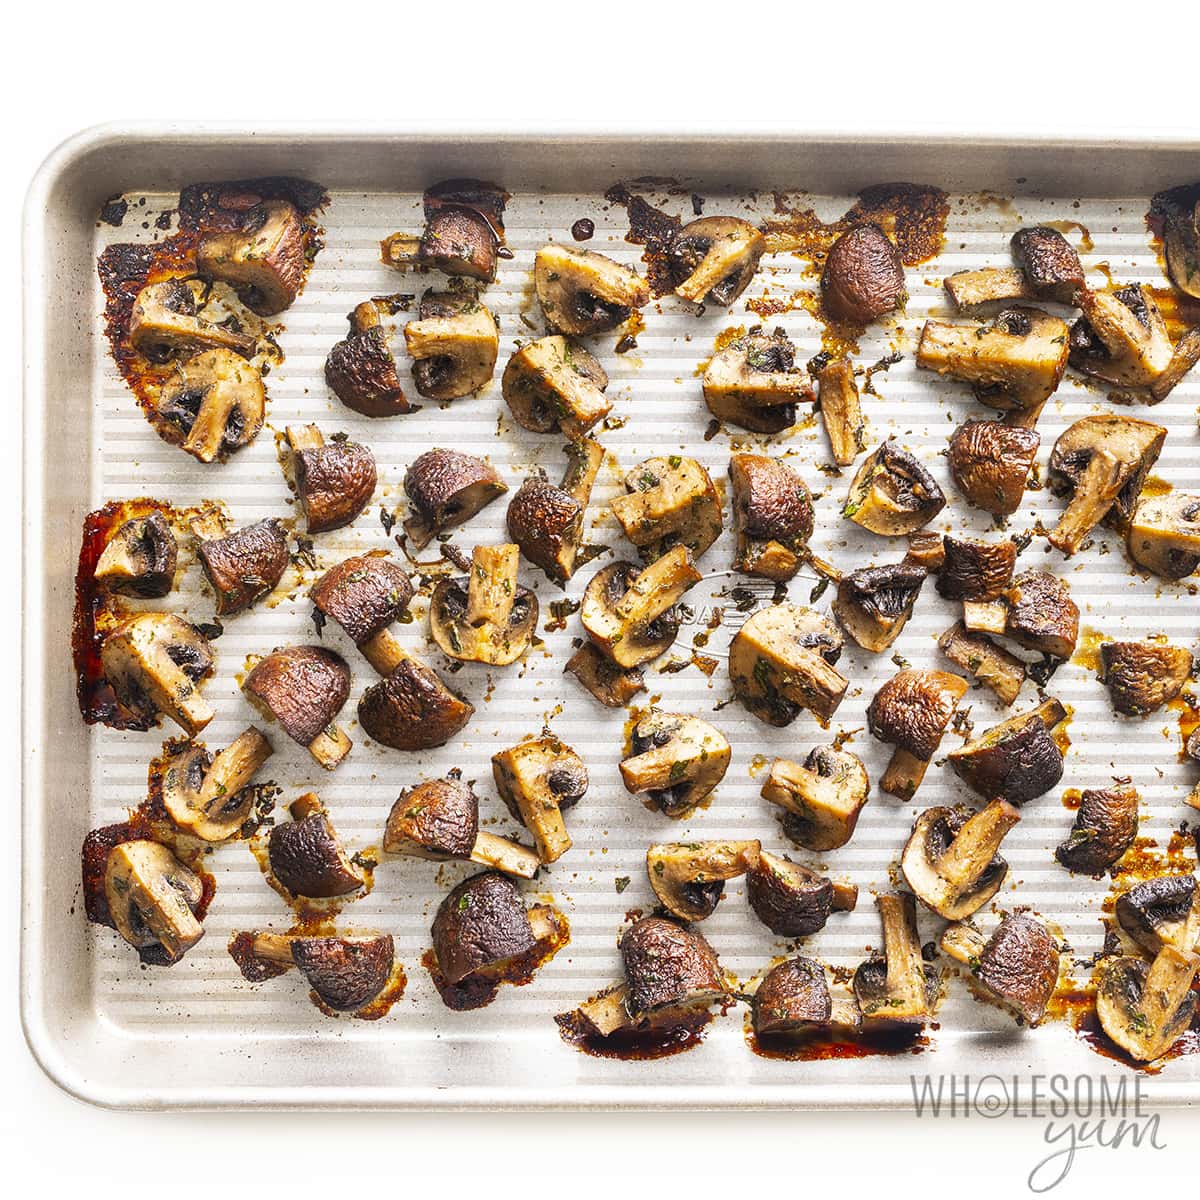 Oven roasted mushrooms on sheet pan.